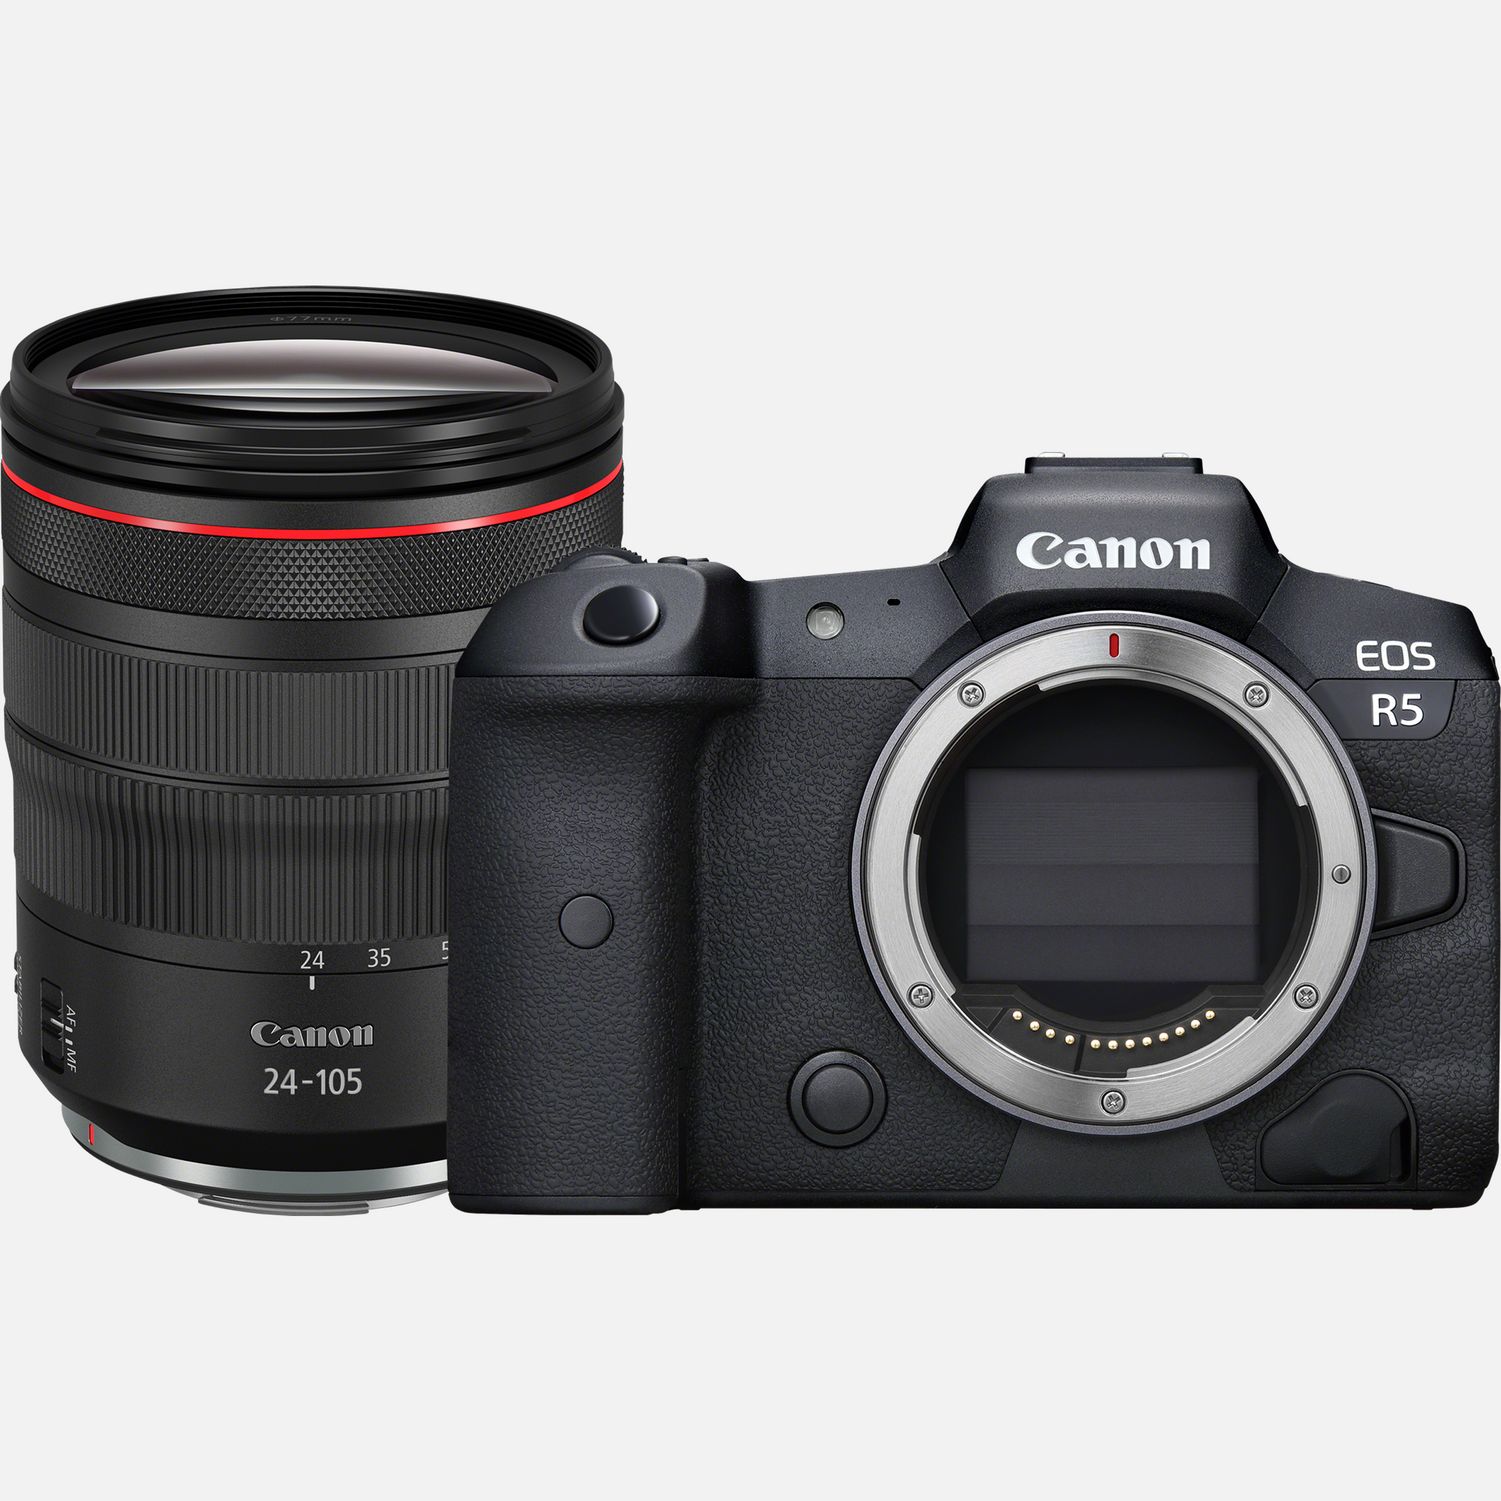 Image of Fotocamera mirrorless Canon EOS R5 + obiettivo RF 24-105mm F4 L IS USM